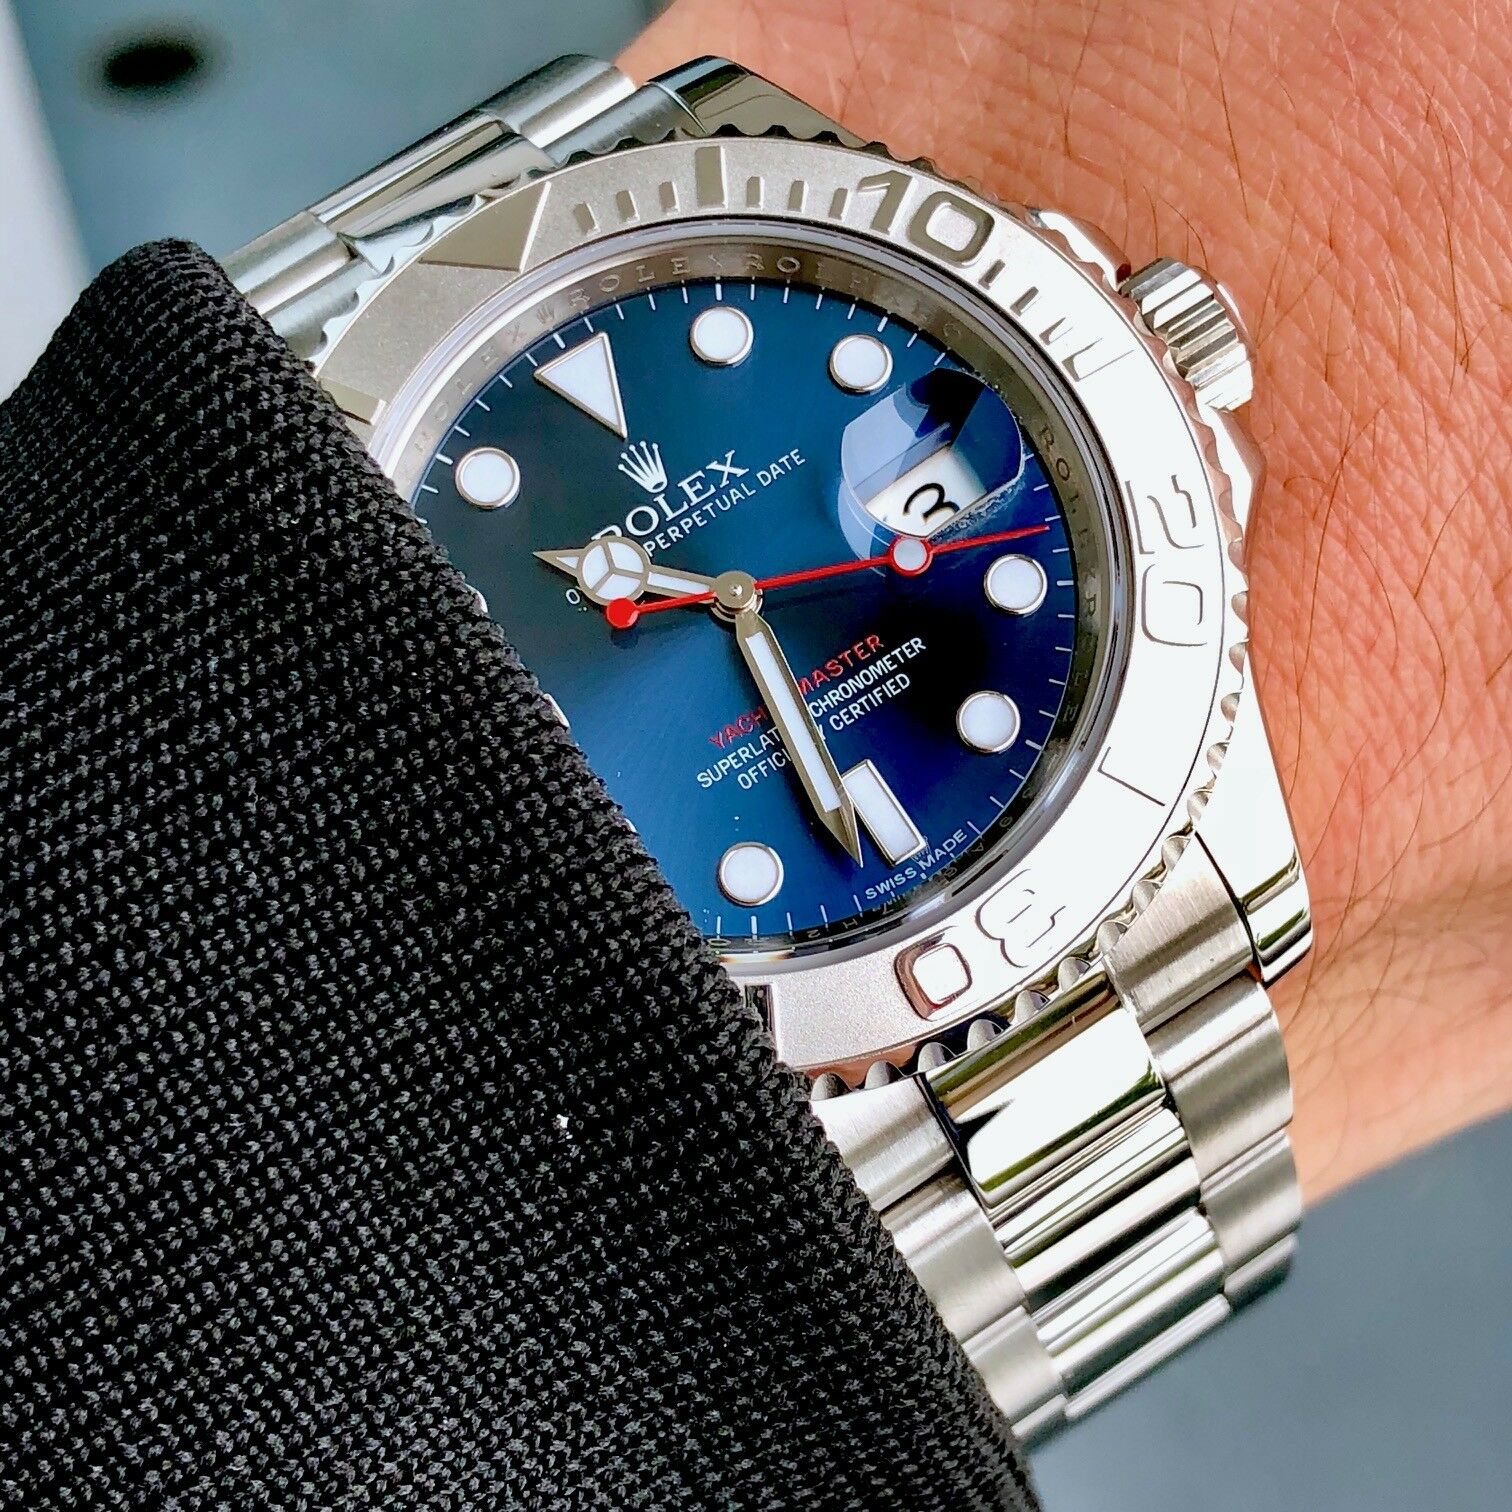 Rolex Yacht-Master Steel & Platinum Bezel Blue Dial 40mm Watch 116622